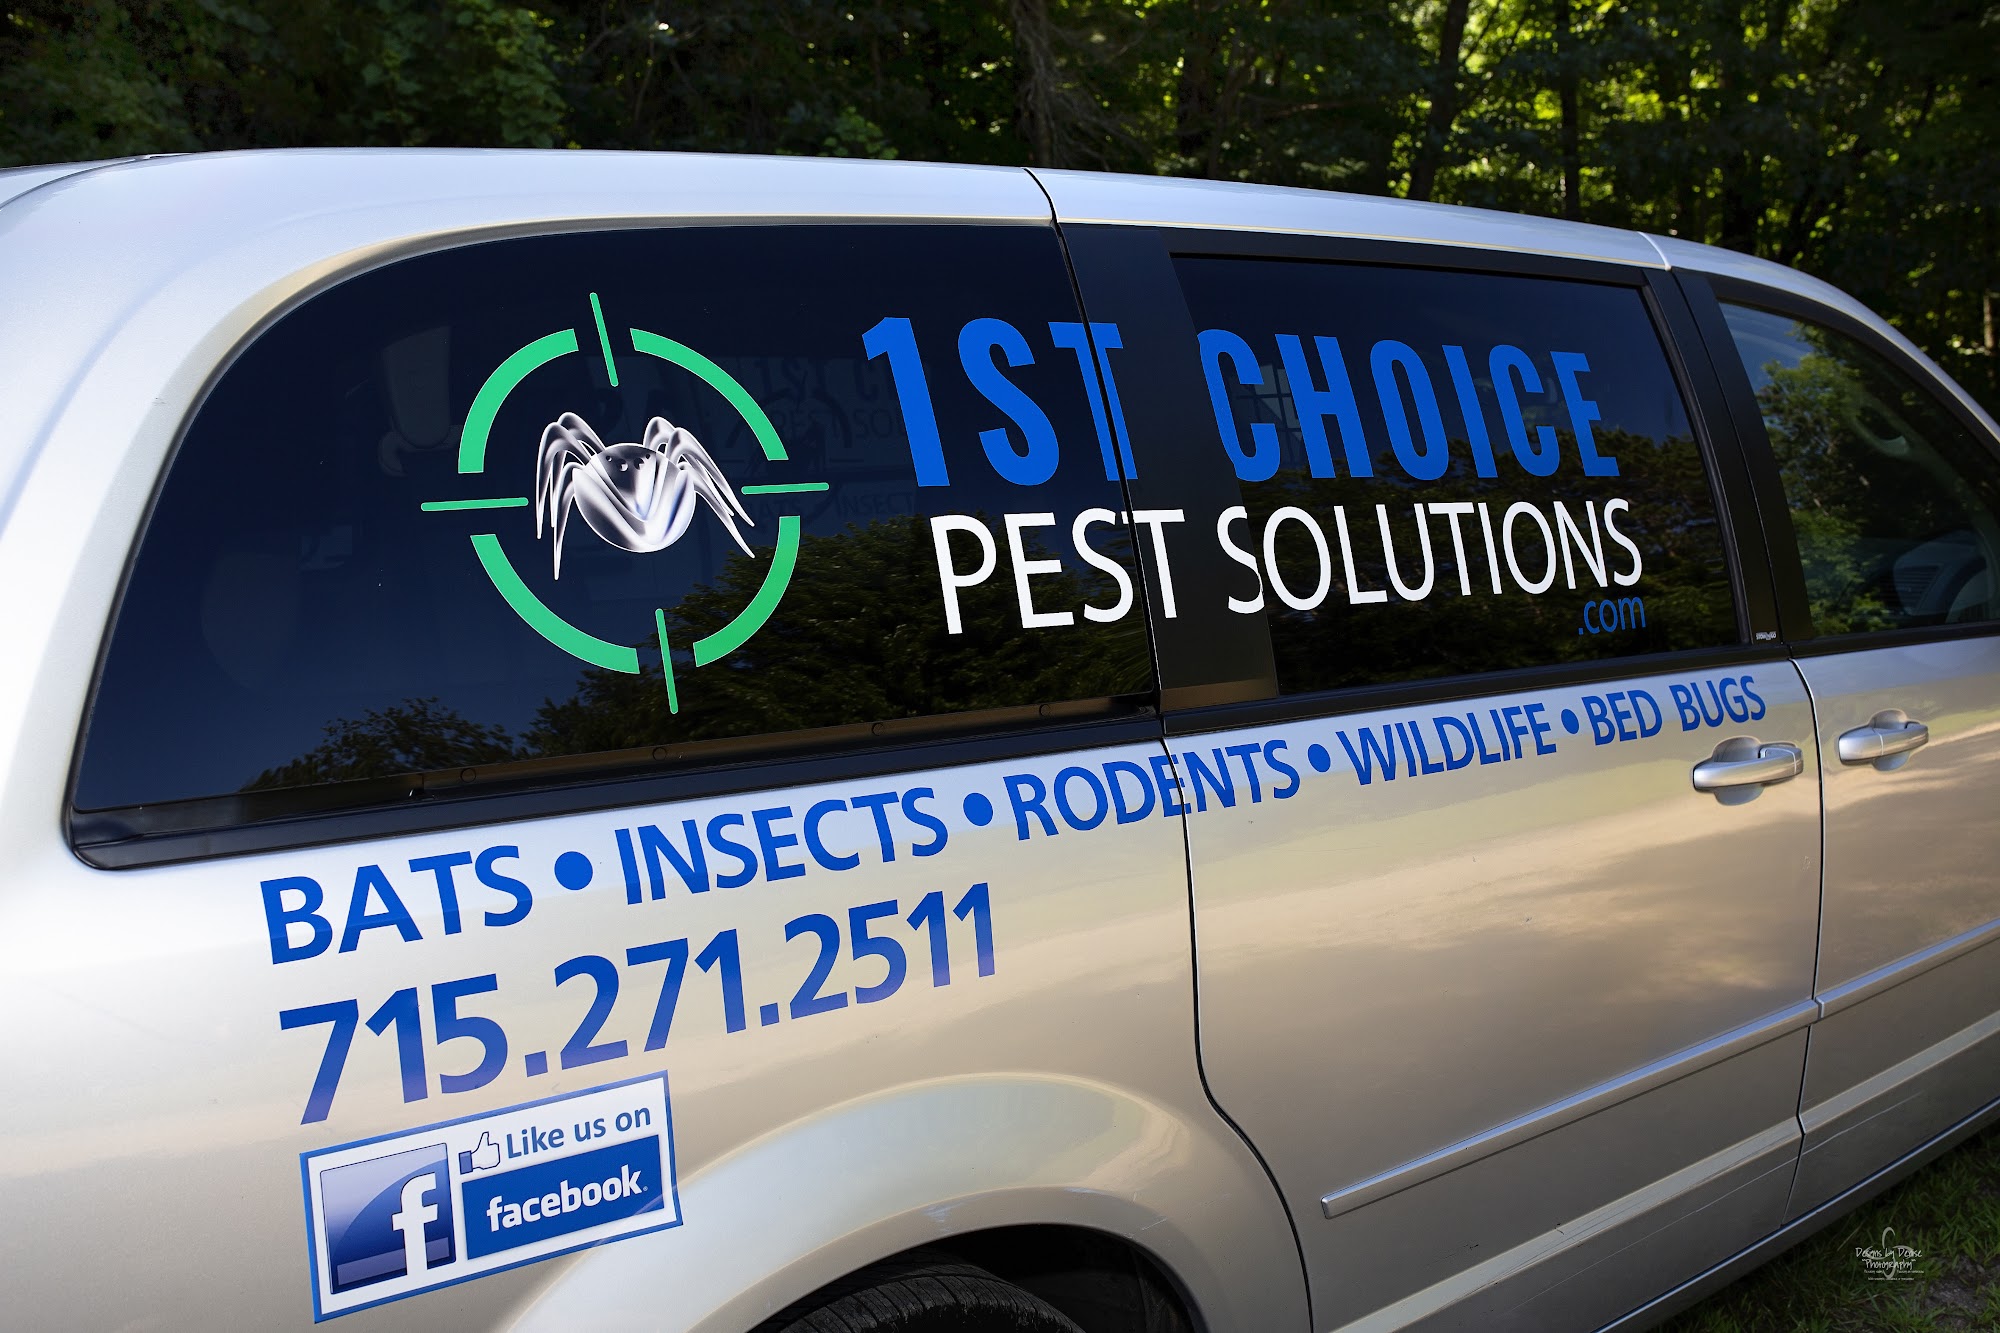 1st Choice Pest Solutions 680 690th St, Mondovi Wisconsin 54755